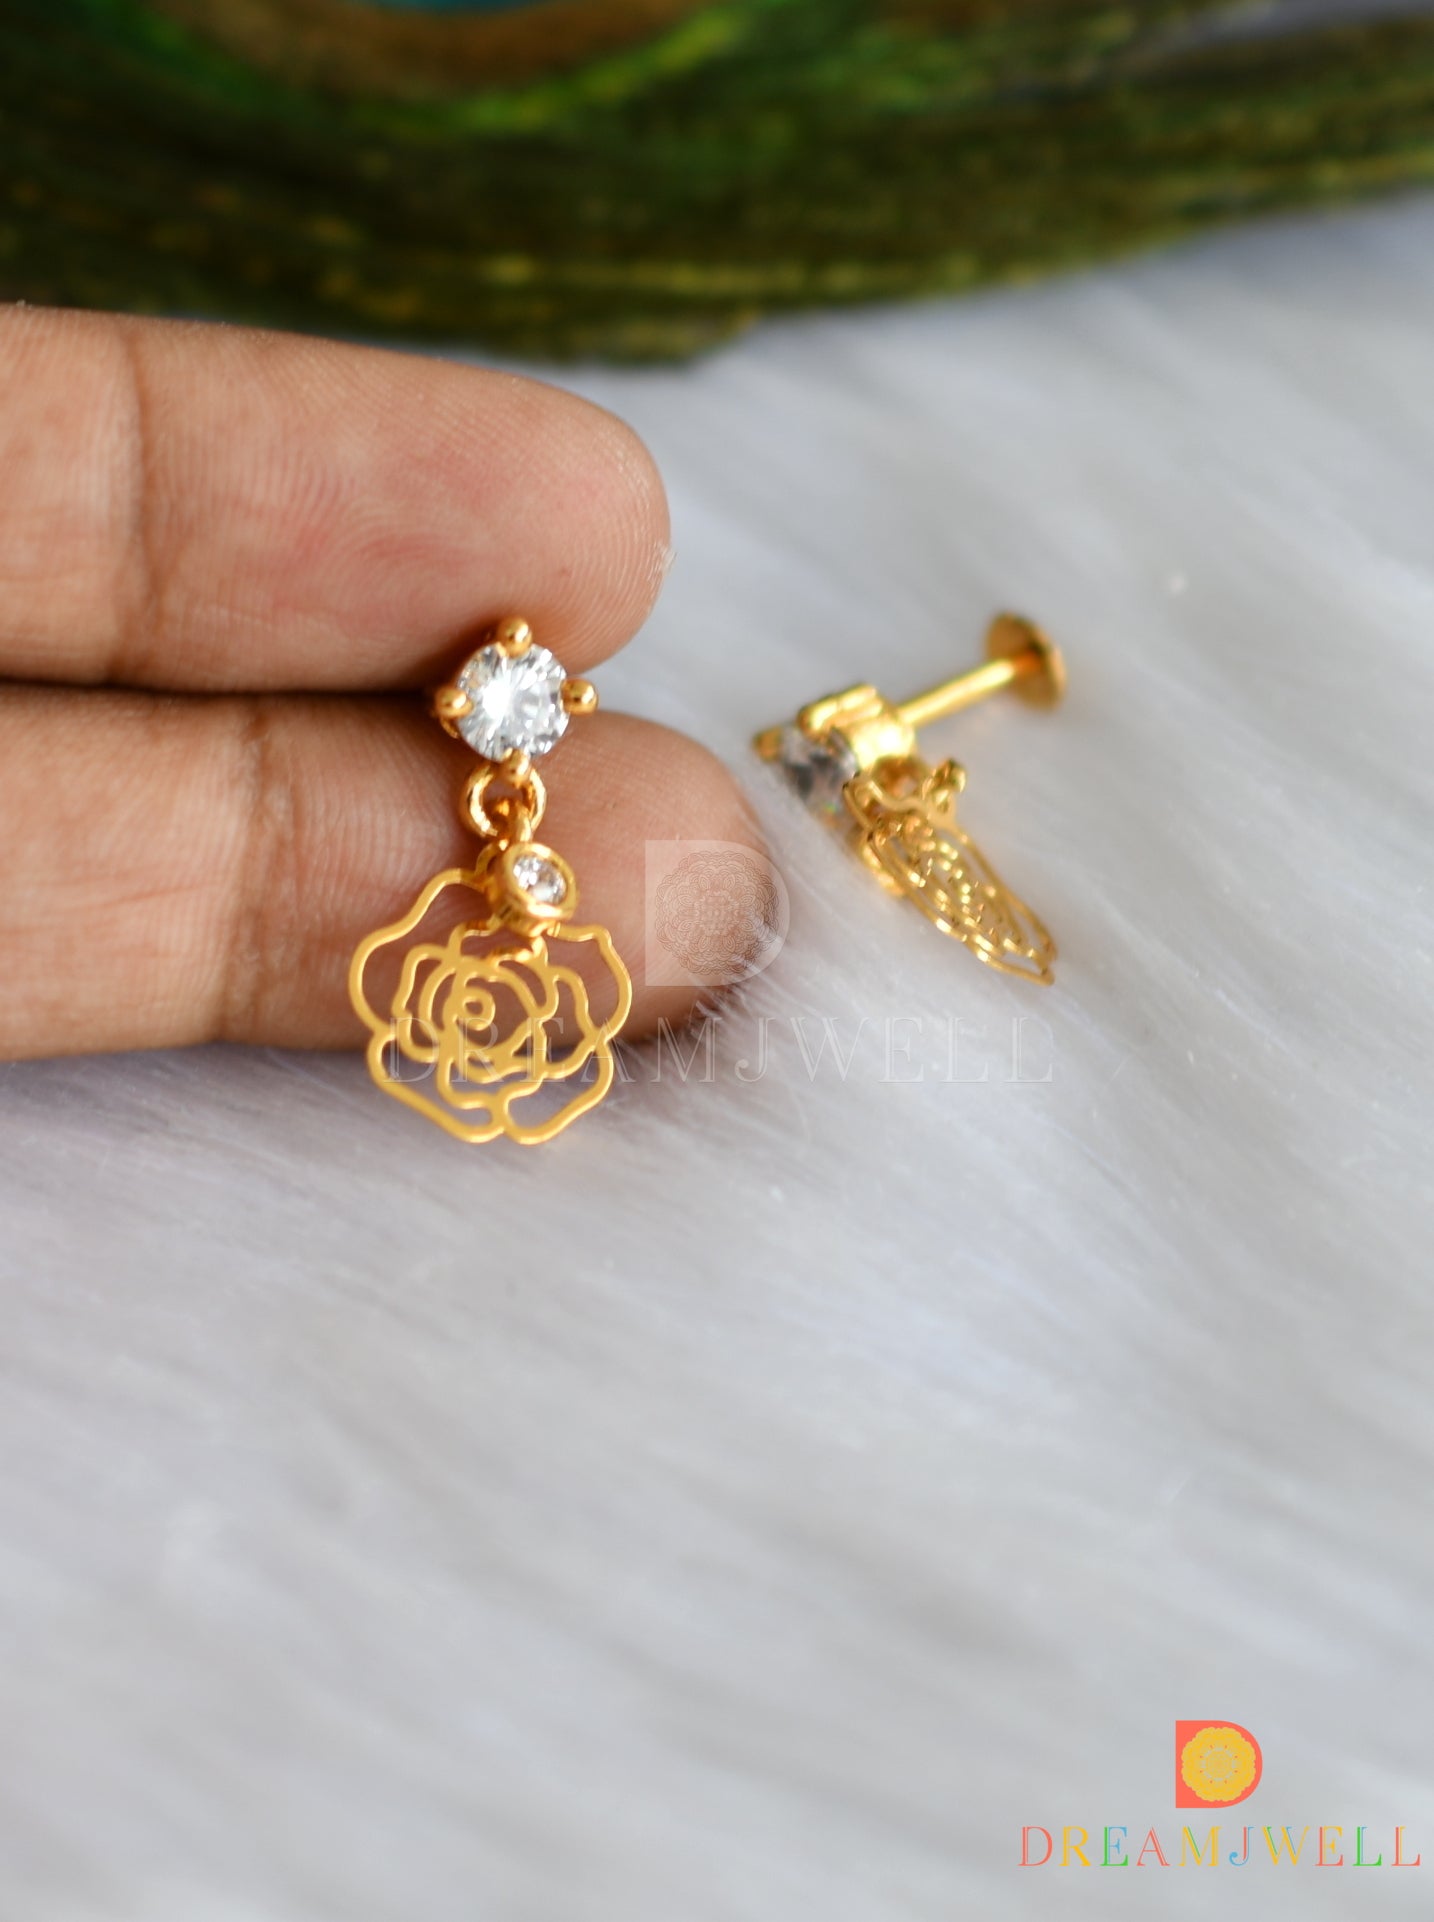 Gold tone white rose earrings dj-38082